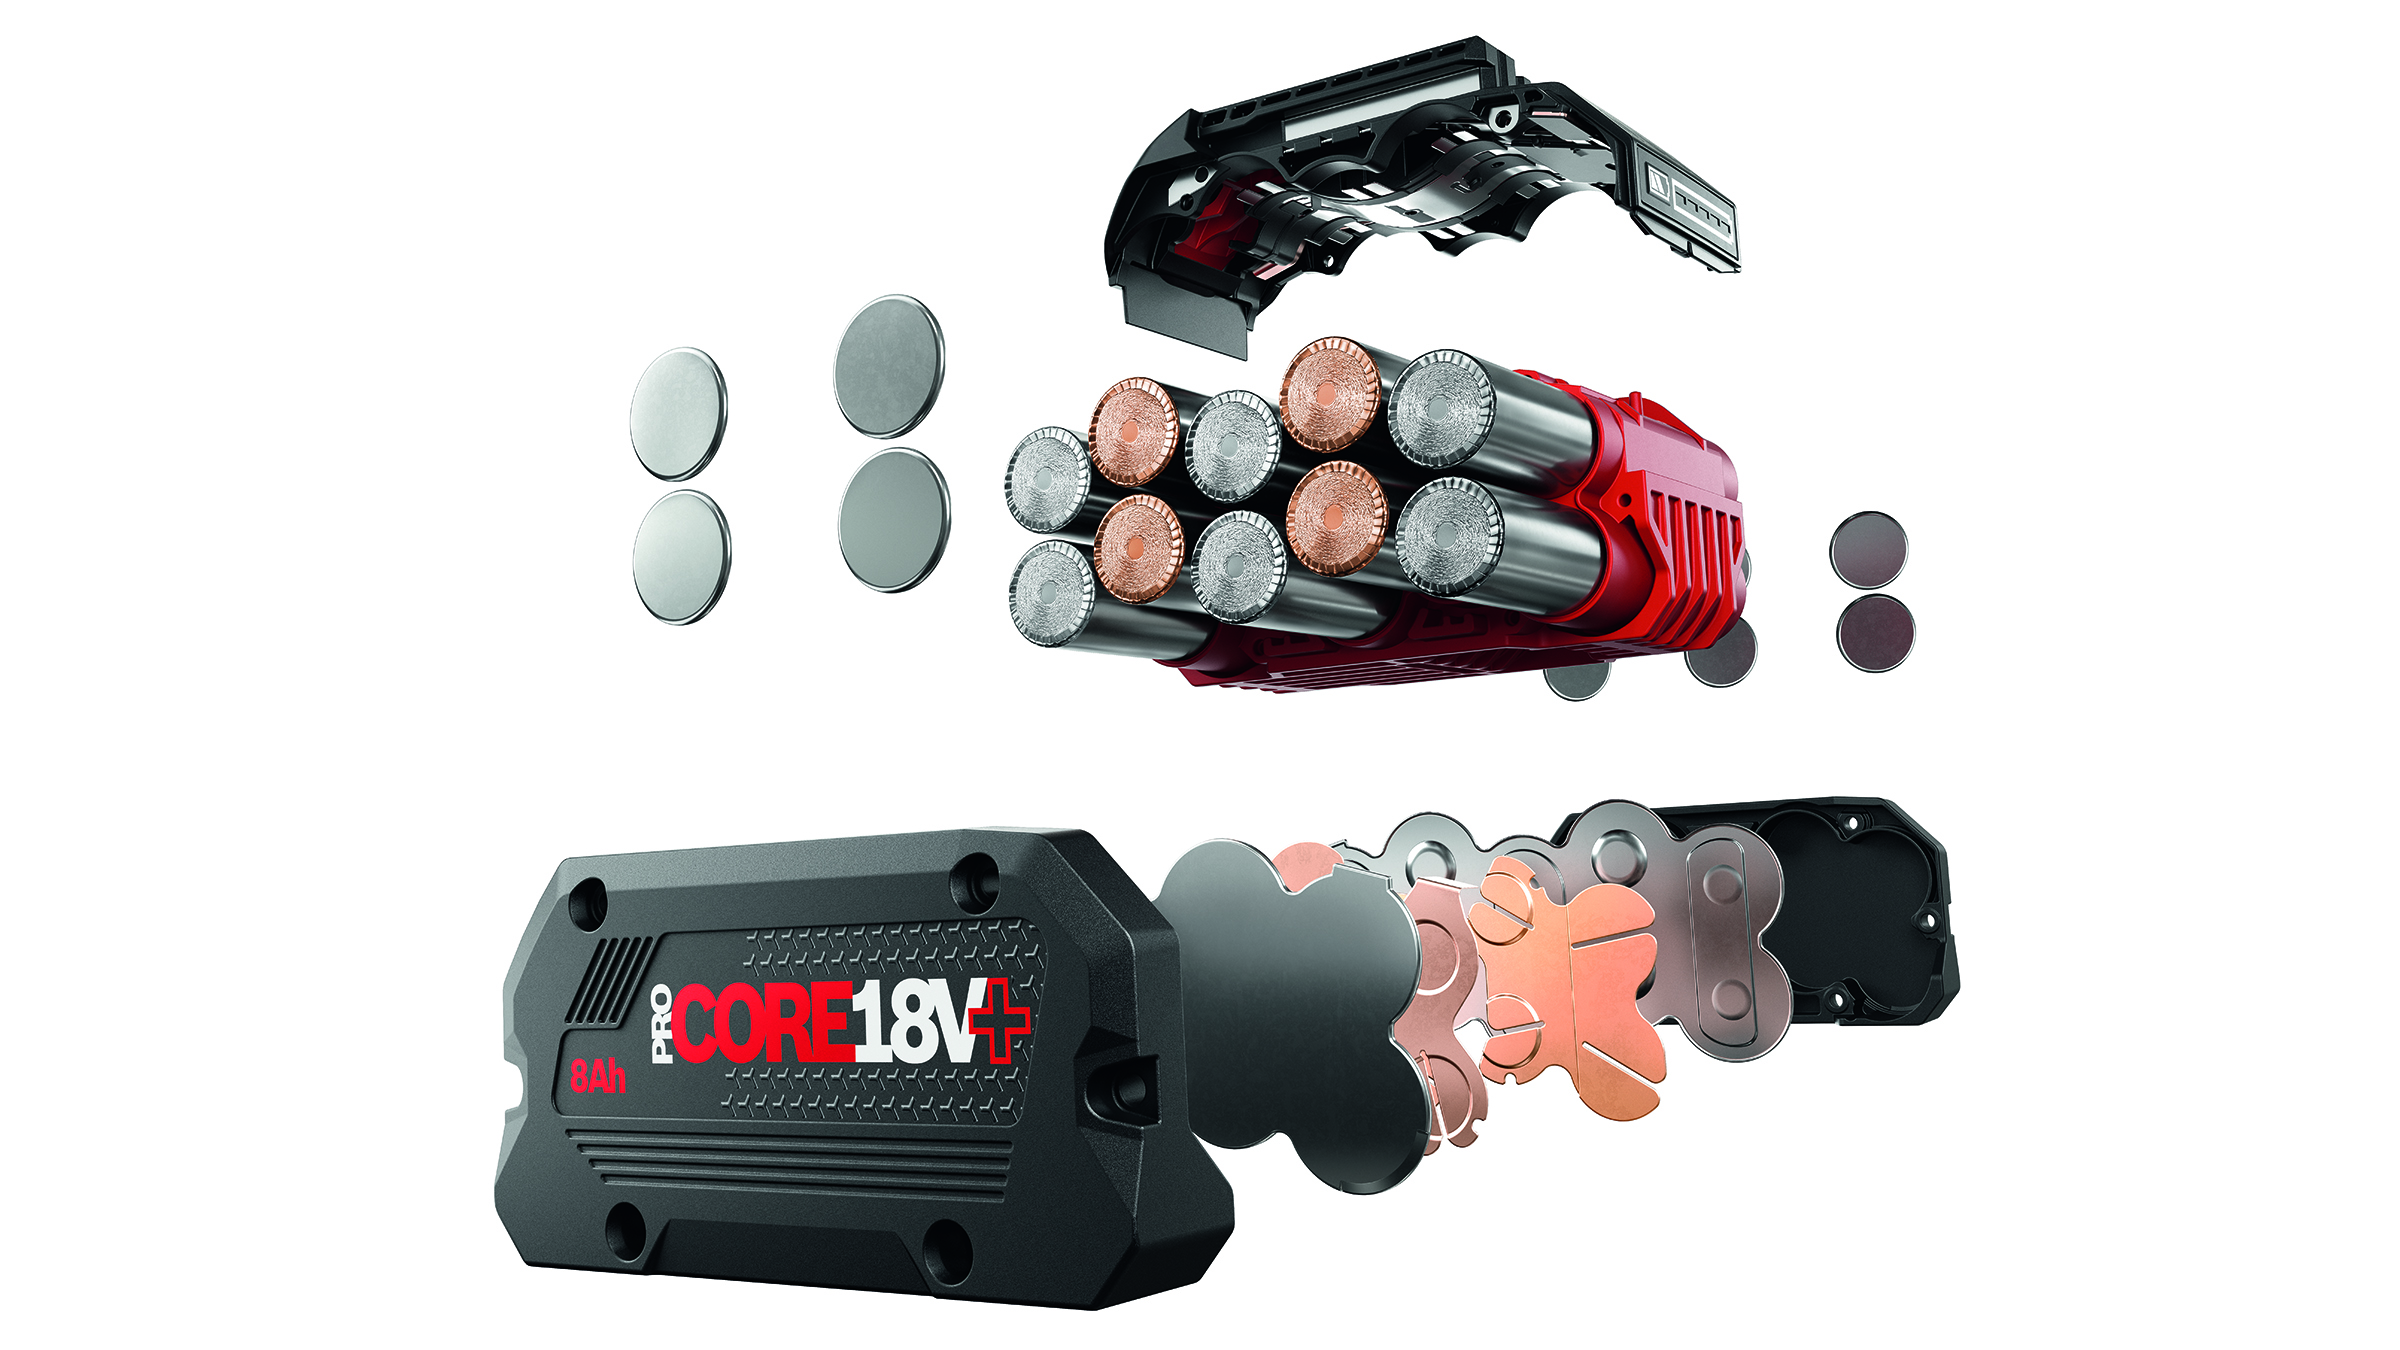 Bosch battery ProCore18V+: Integration of key technologies secures